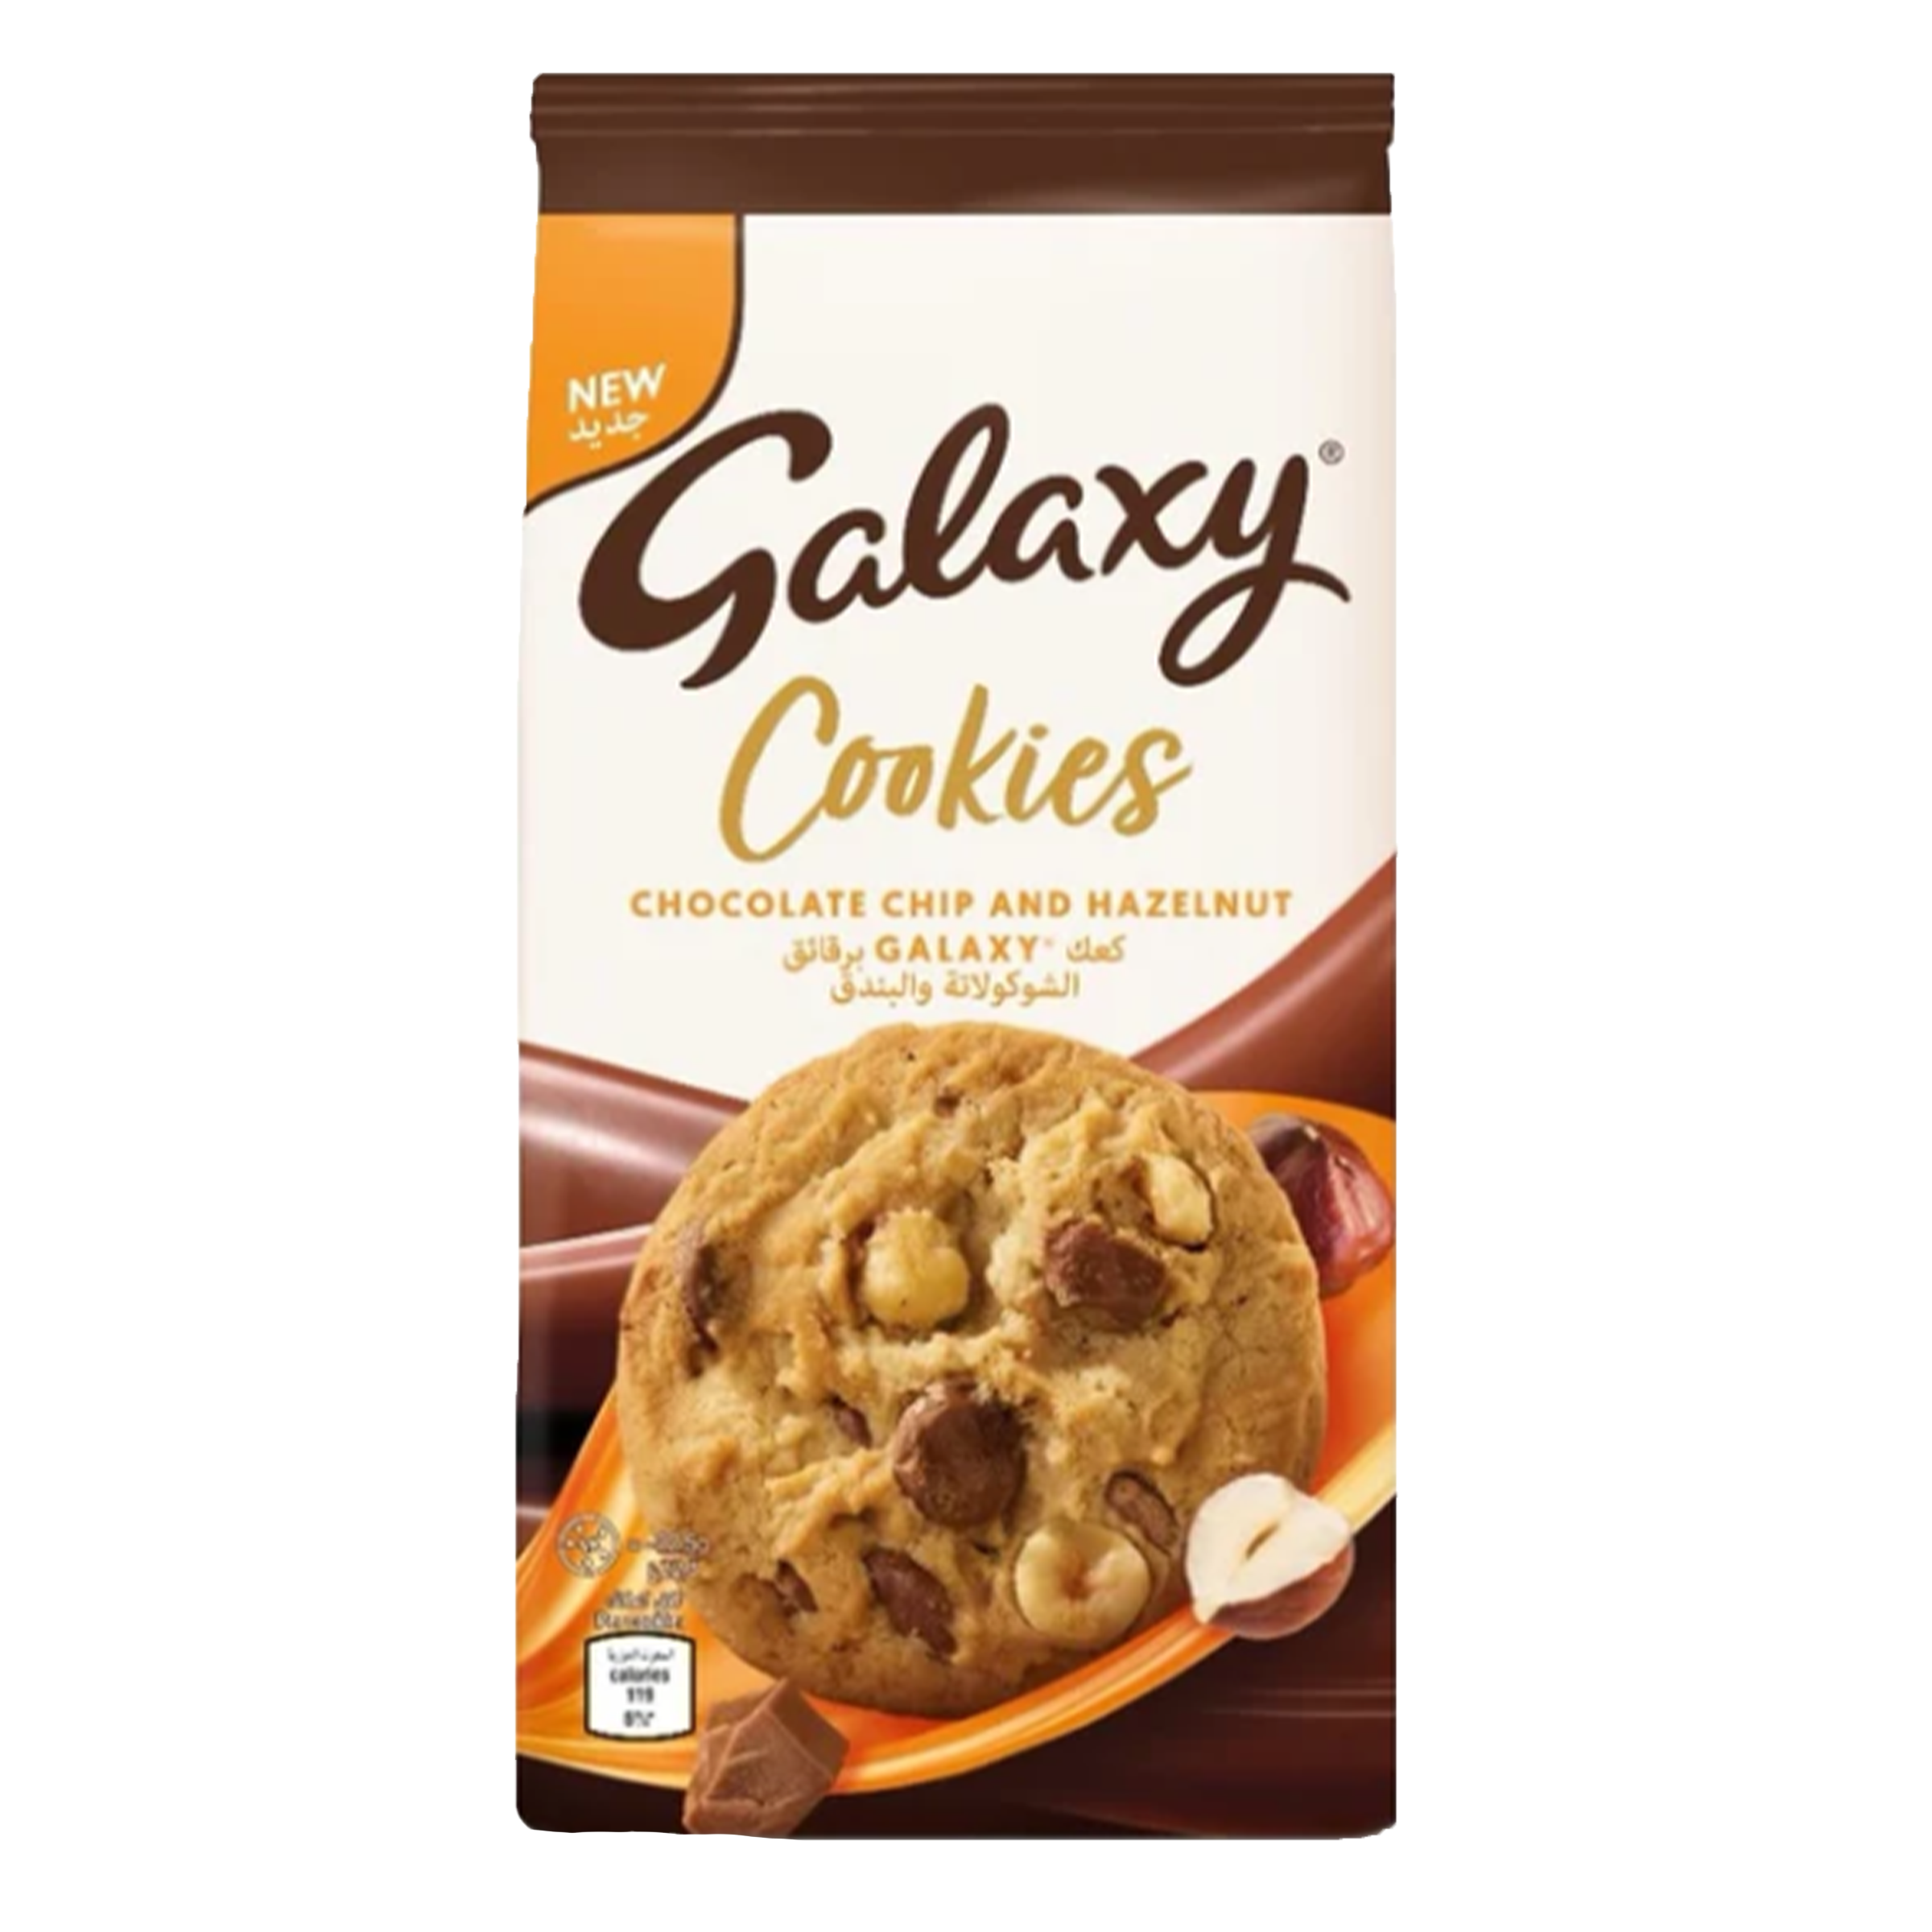 Galaxy Cookies Chocolate Chip & Hazelnut (Europe)